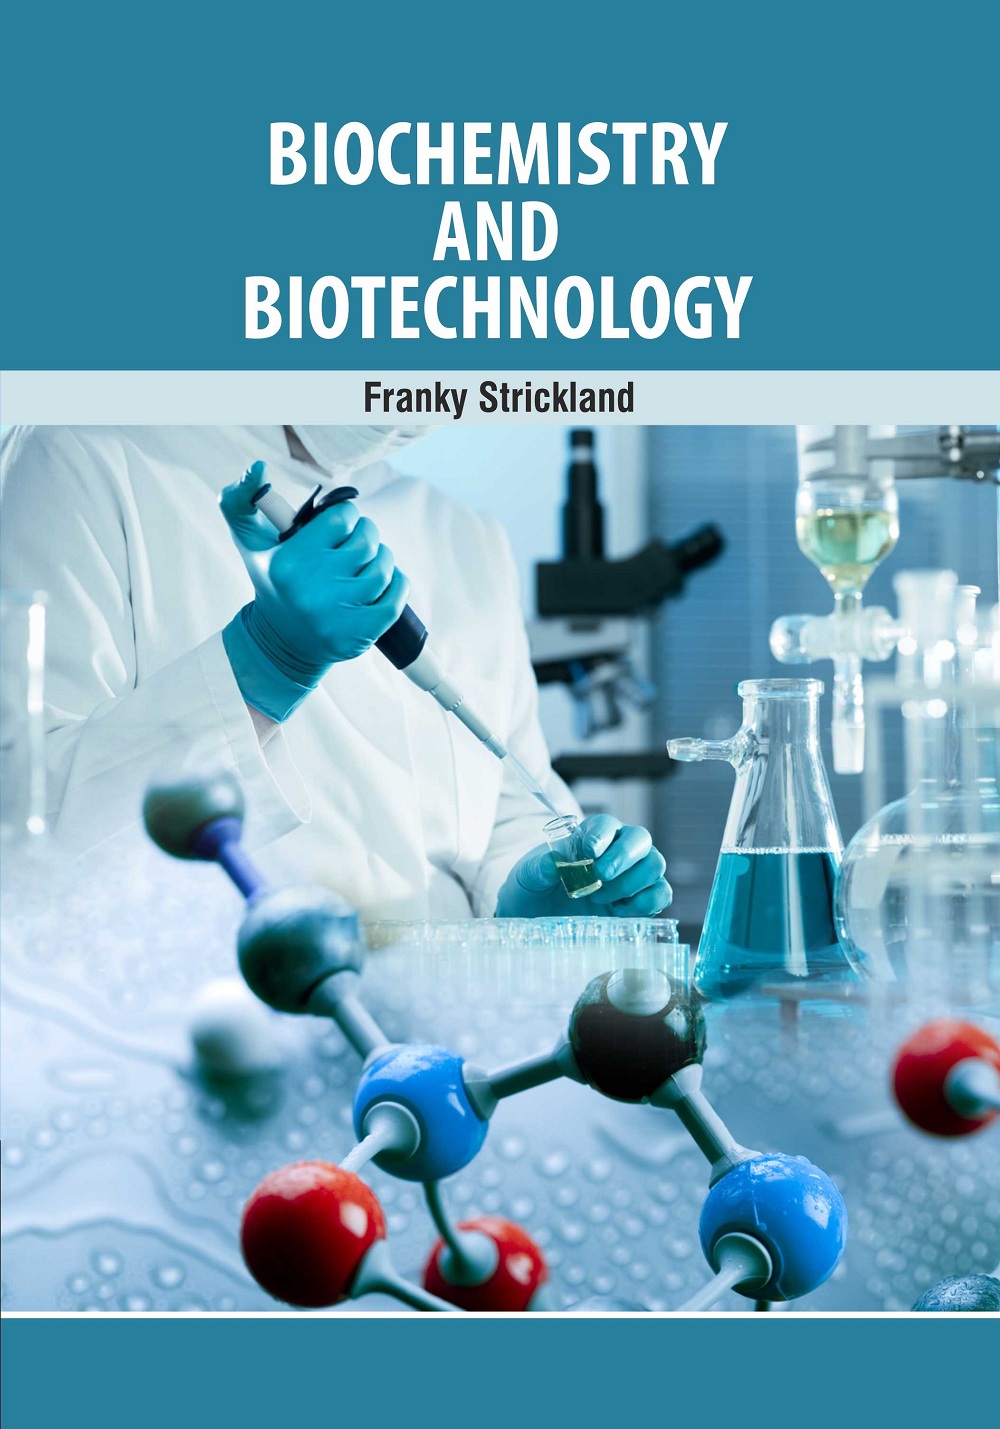 catalog/books/Biochemistry and Biotechnology.jpg